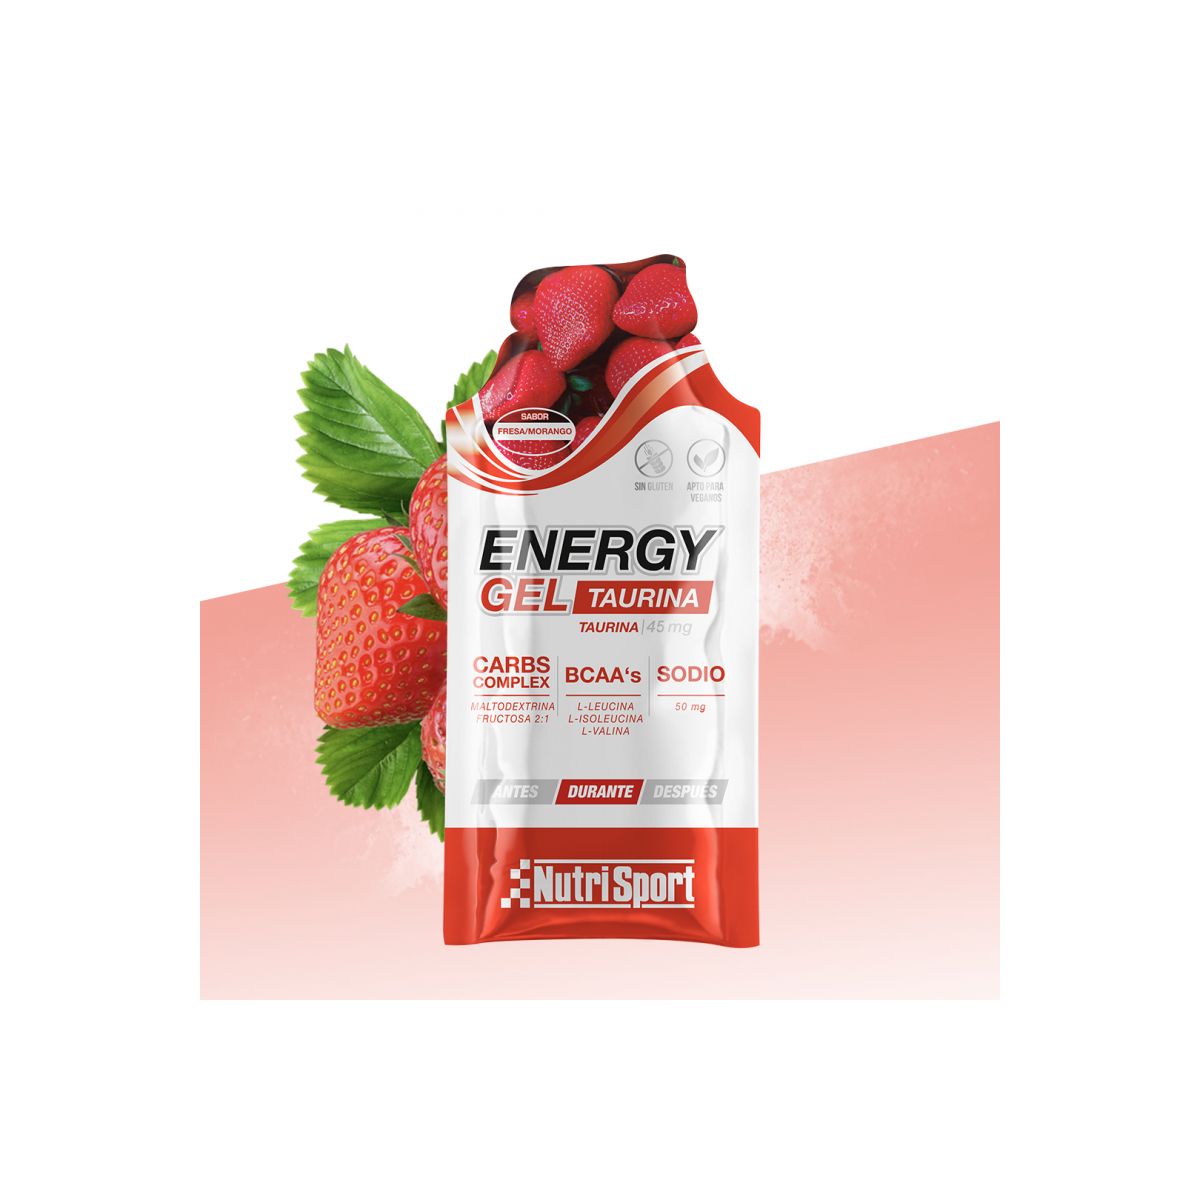 Energy Gel Nutrisport con Taurina de 35gr sabor fresa